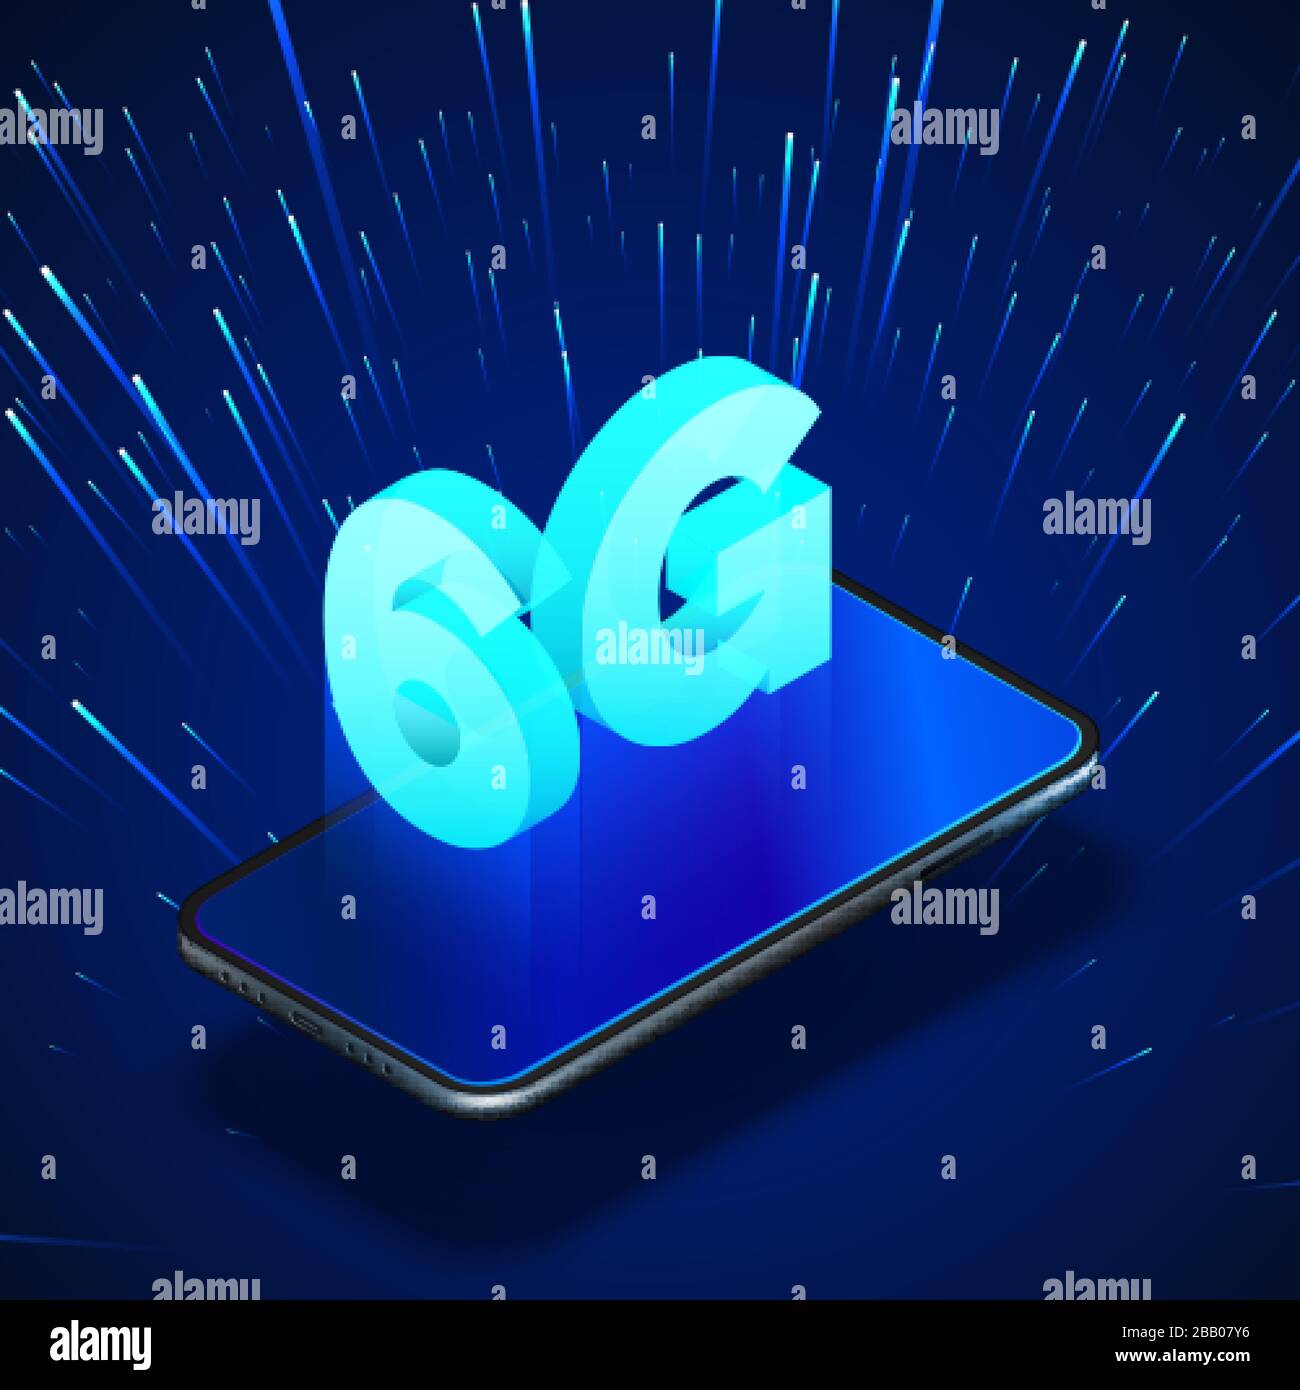 Schnelle, globale 6G-Mobilfunknetze. Business Isometric Illustration Smartphone mit Internet-Hologramm und Text 6g. Moderne Wireless-Technologie. Vecto Stock Vektor